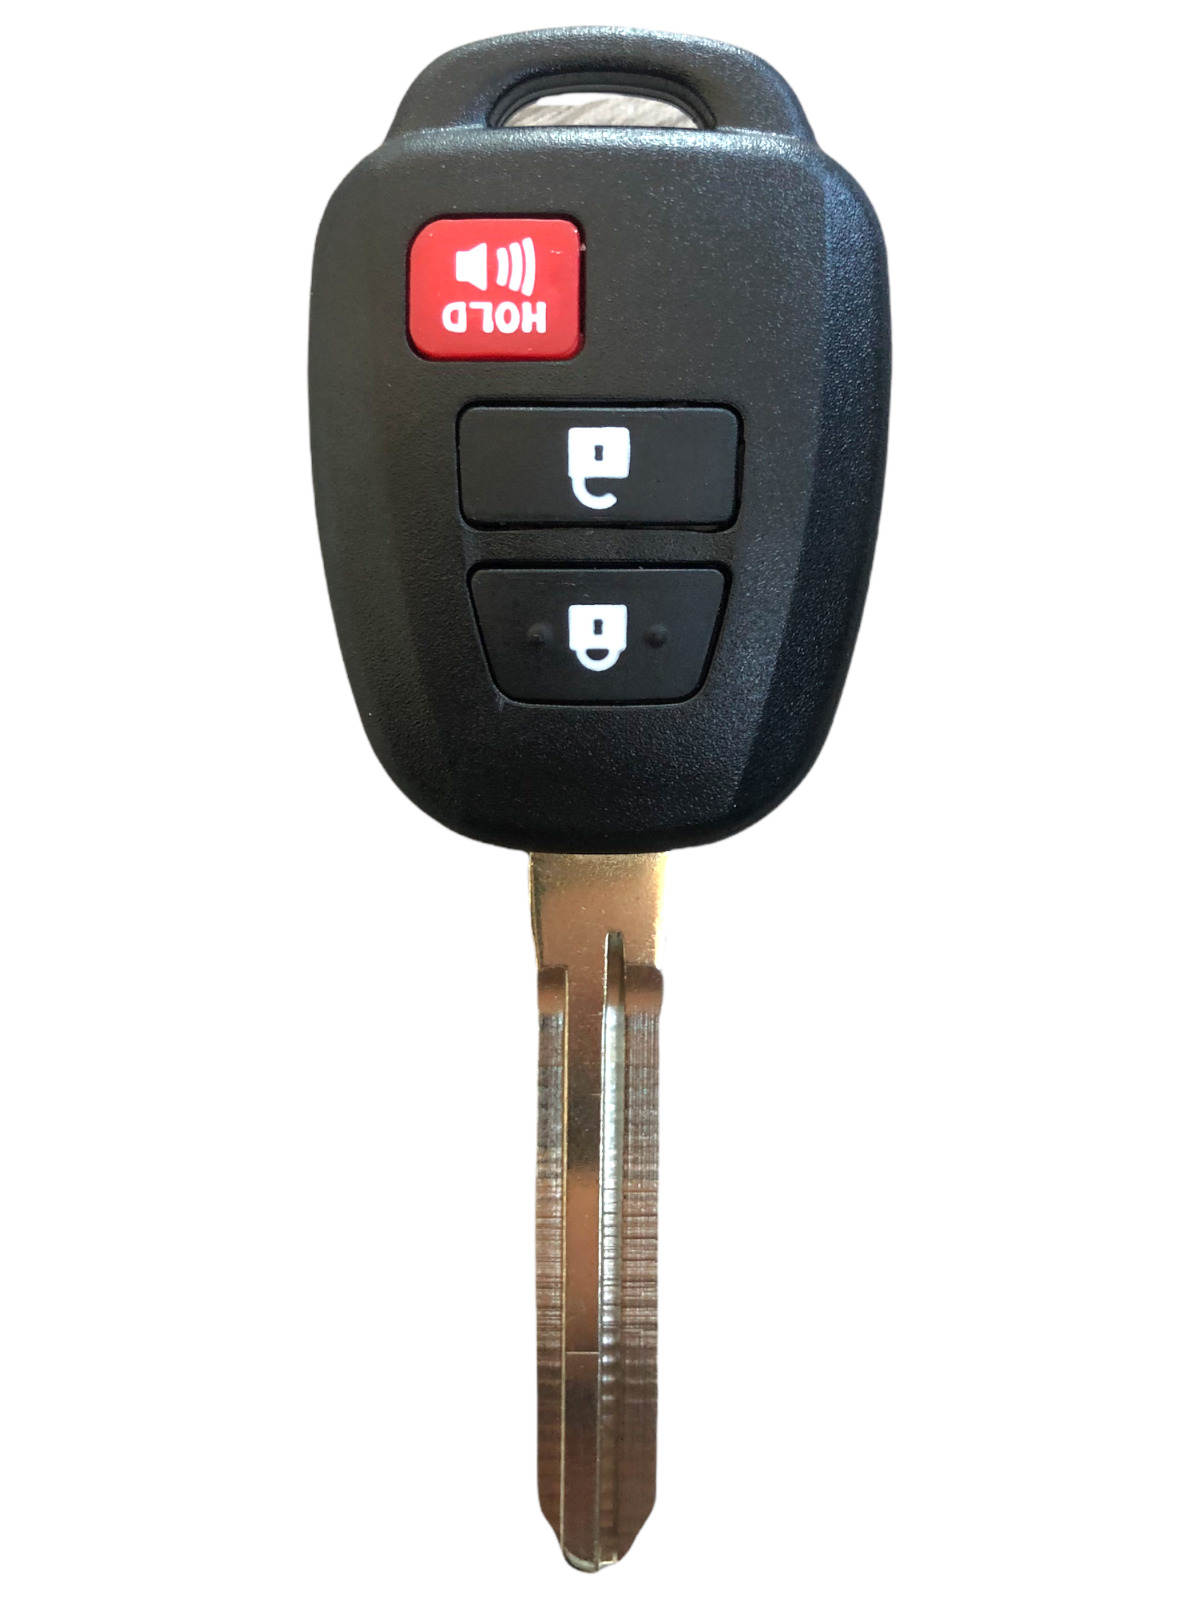 New Remote Car Key Fob for GQ4-52T 315MHZ Chip-H 2013-2019 Toyota RAV4